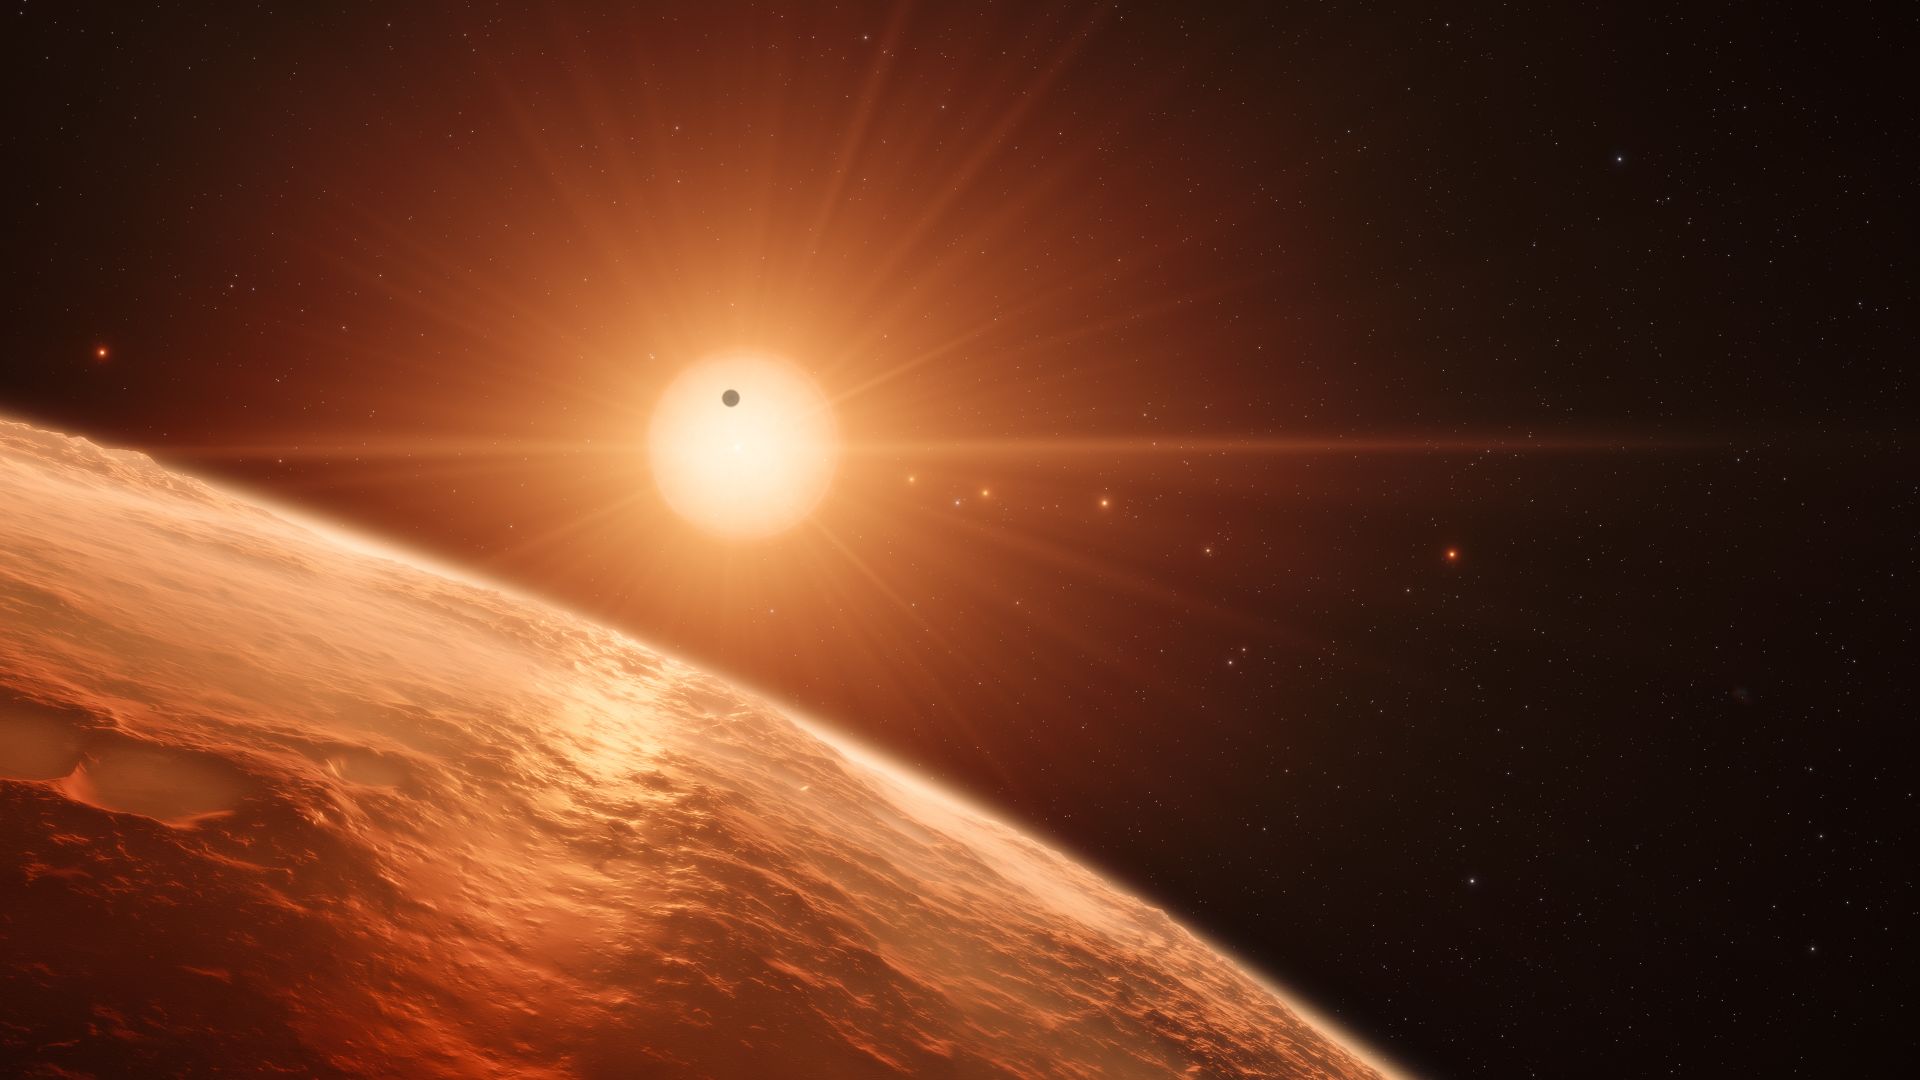 Wallpaper TRAPPIST-1, star, planet, space, 4k, 8k